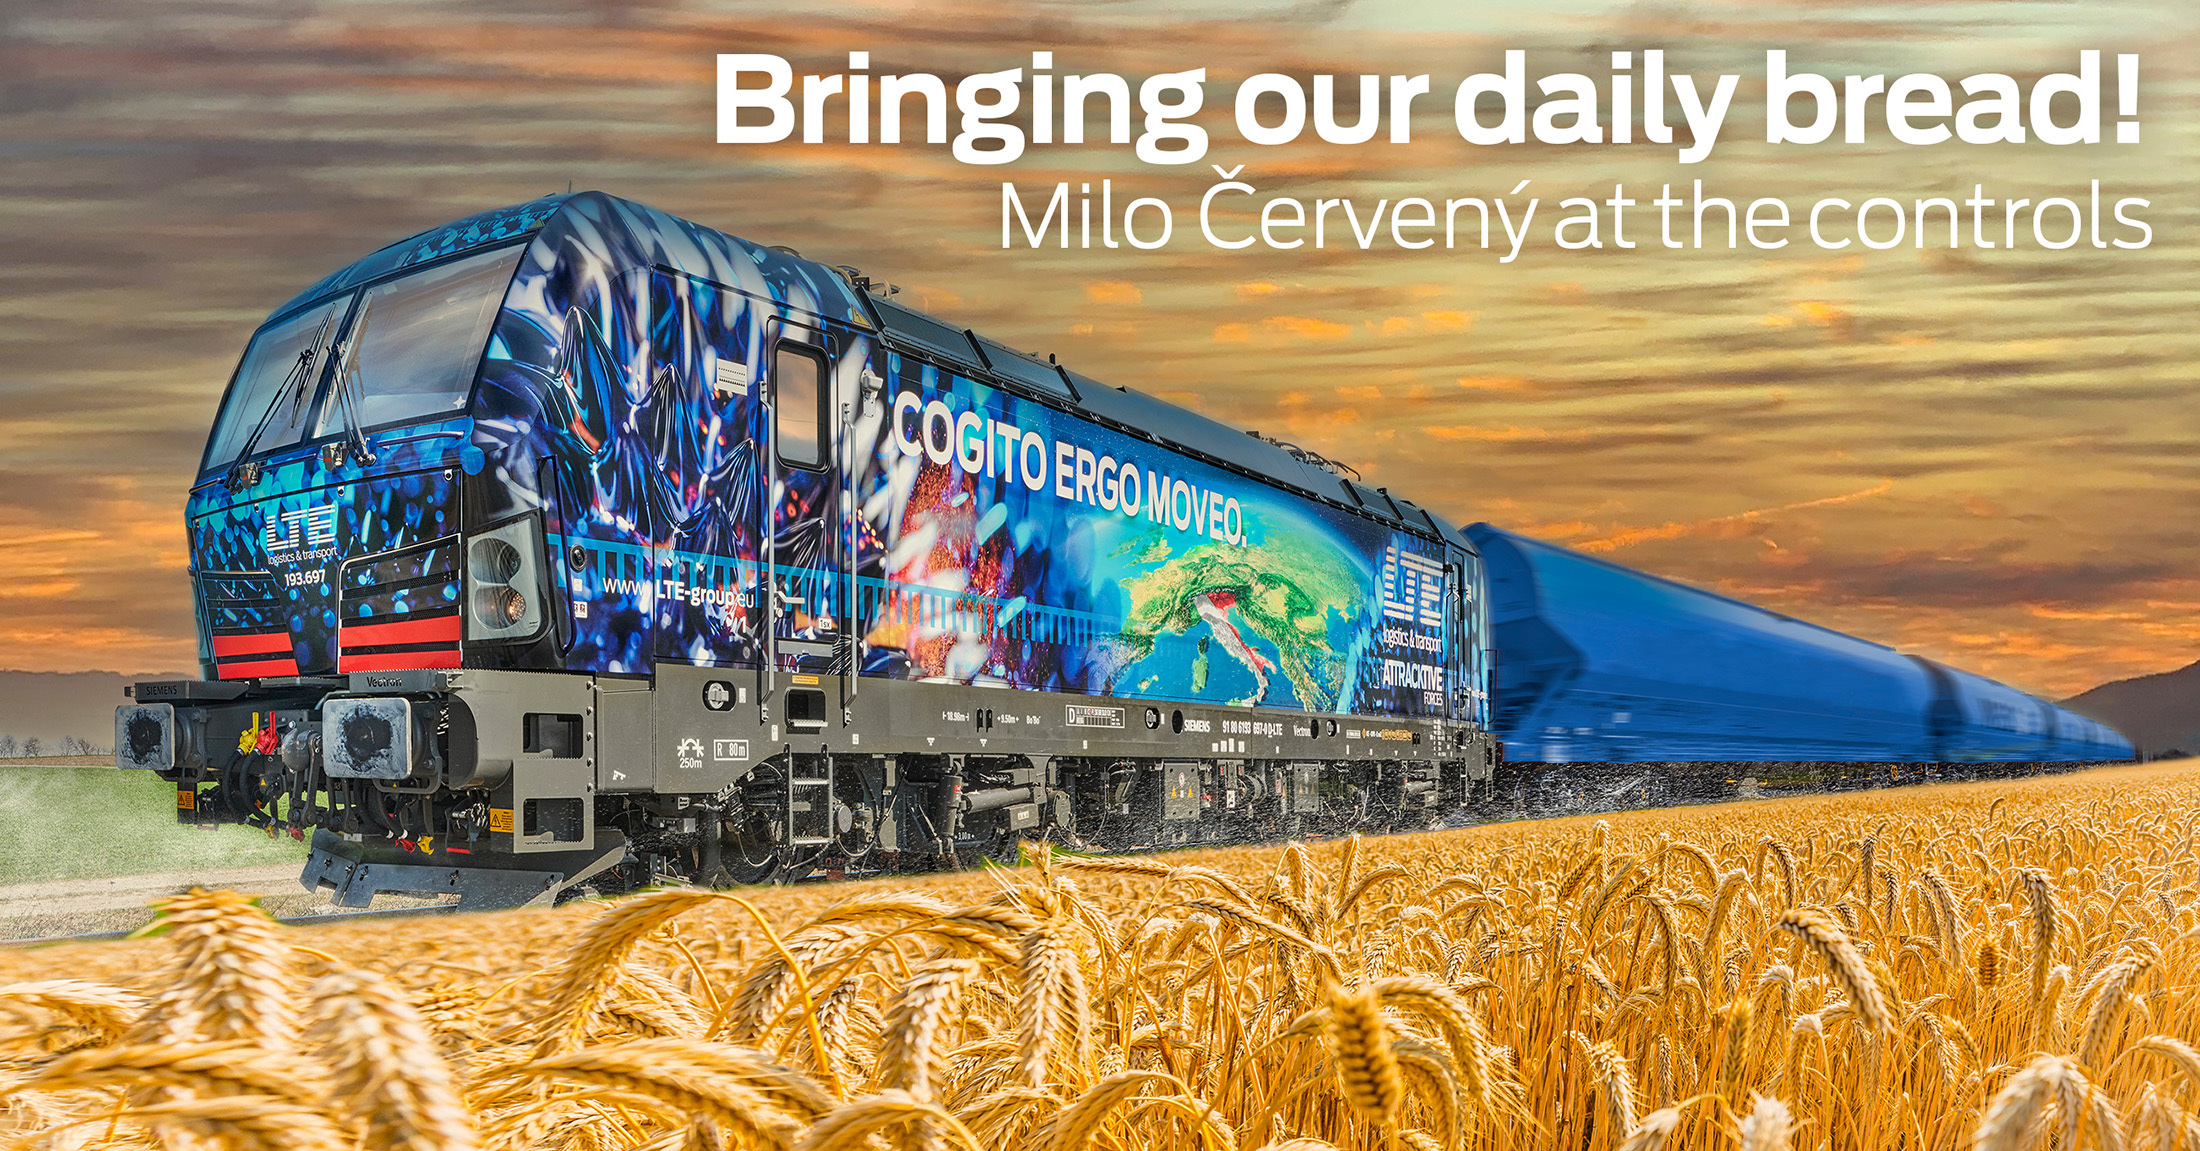 LTE HO | Miloslav Cervený - Bringing our daily bread